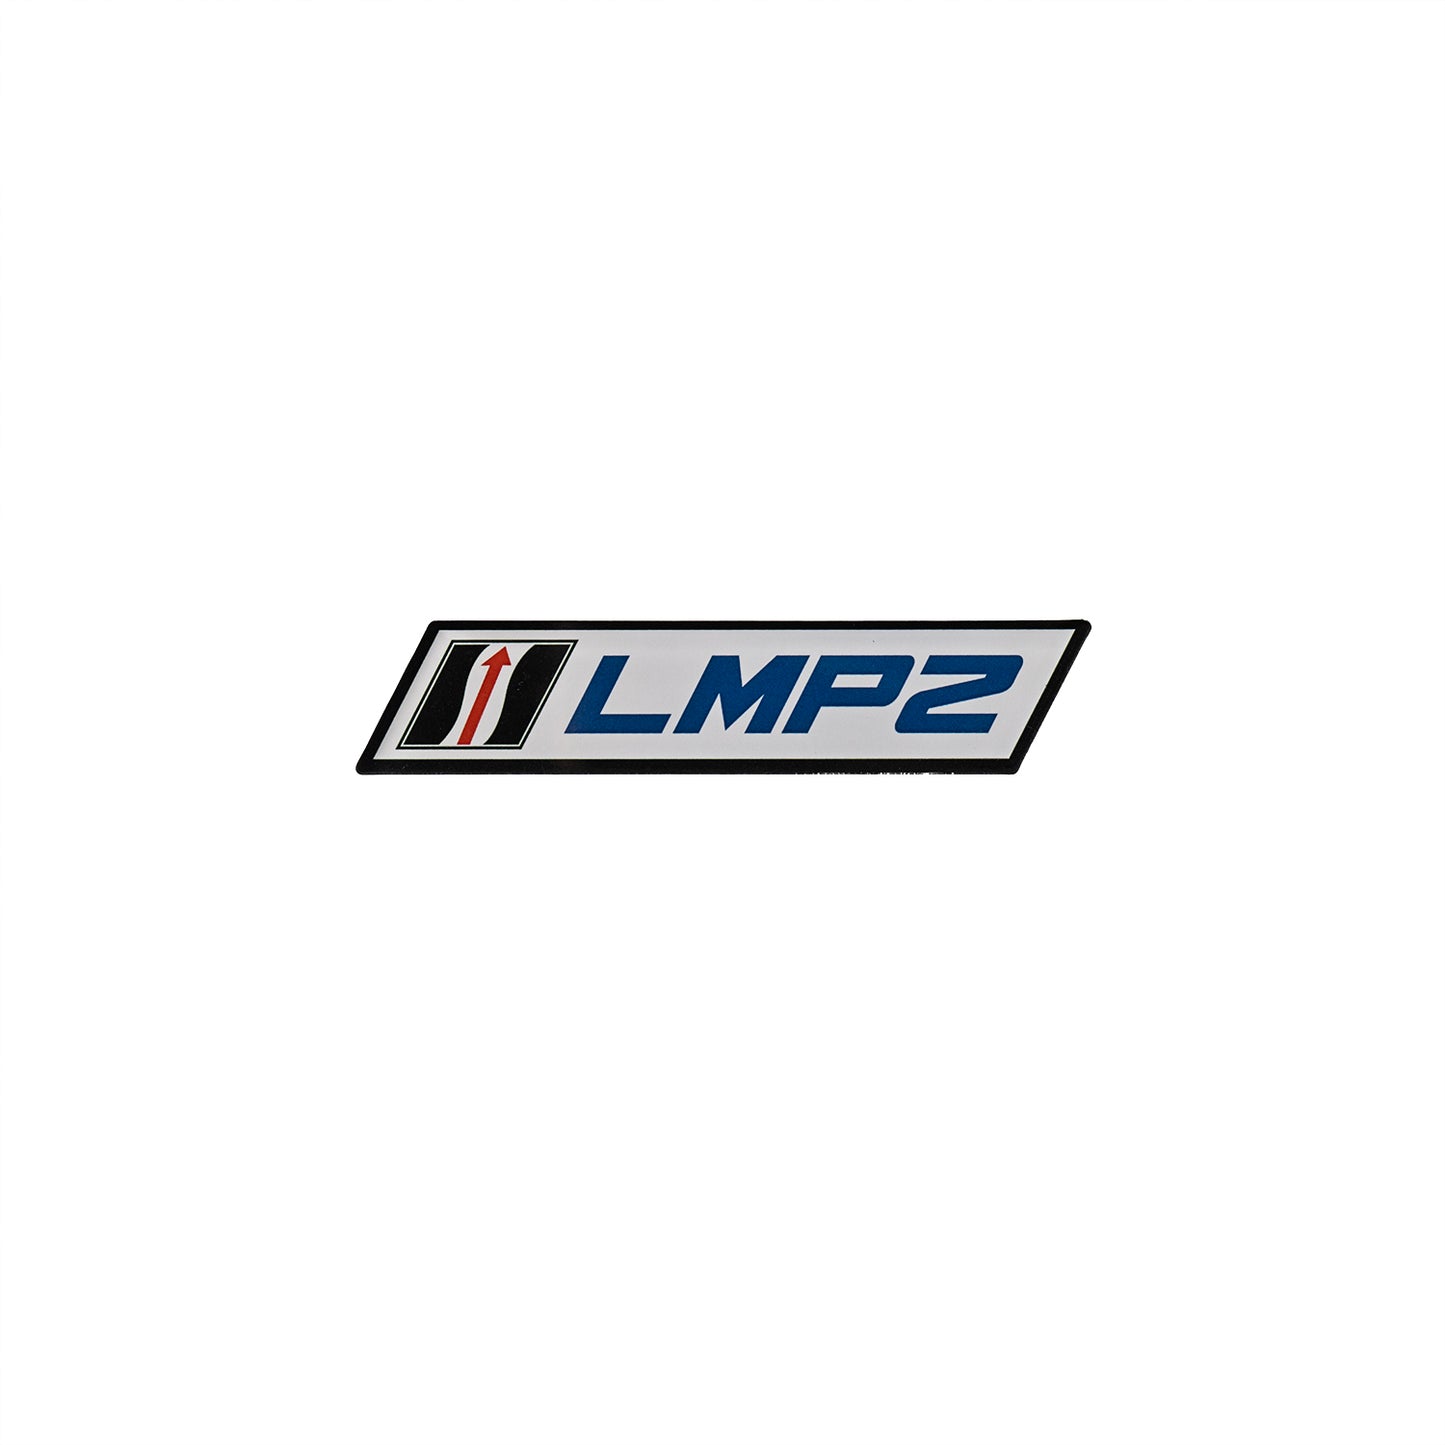 LMP2 Car Class Magnet